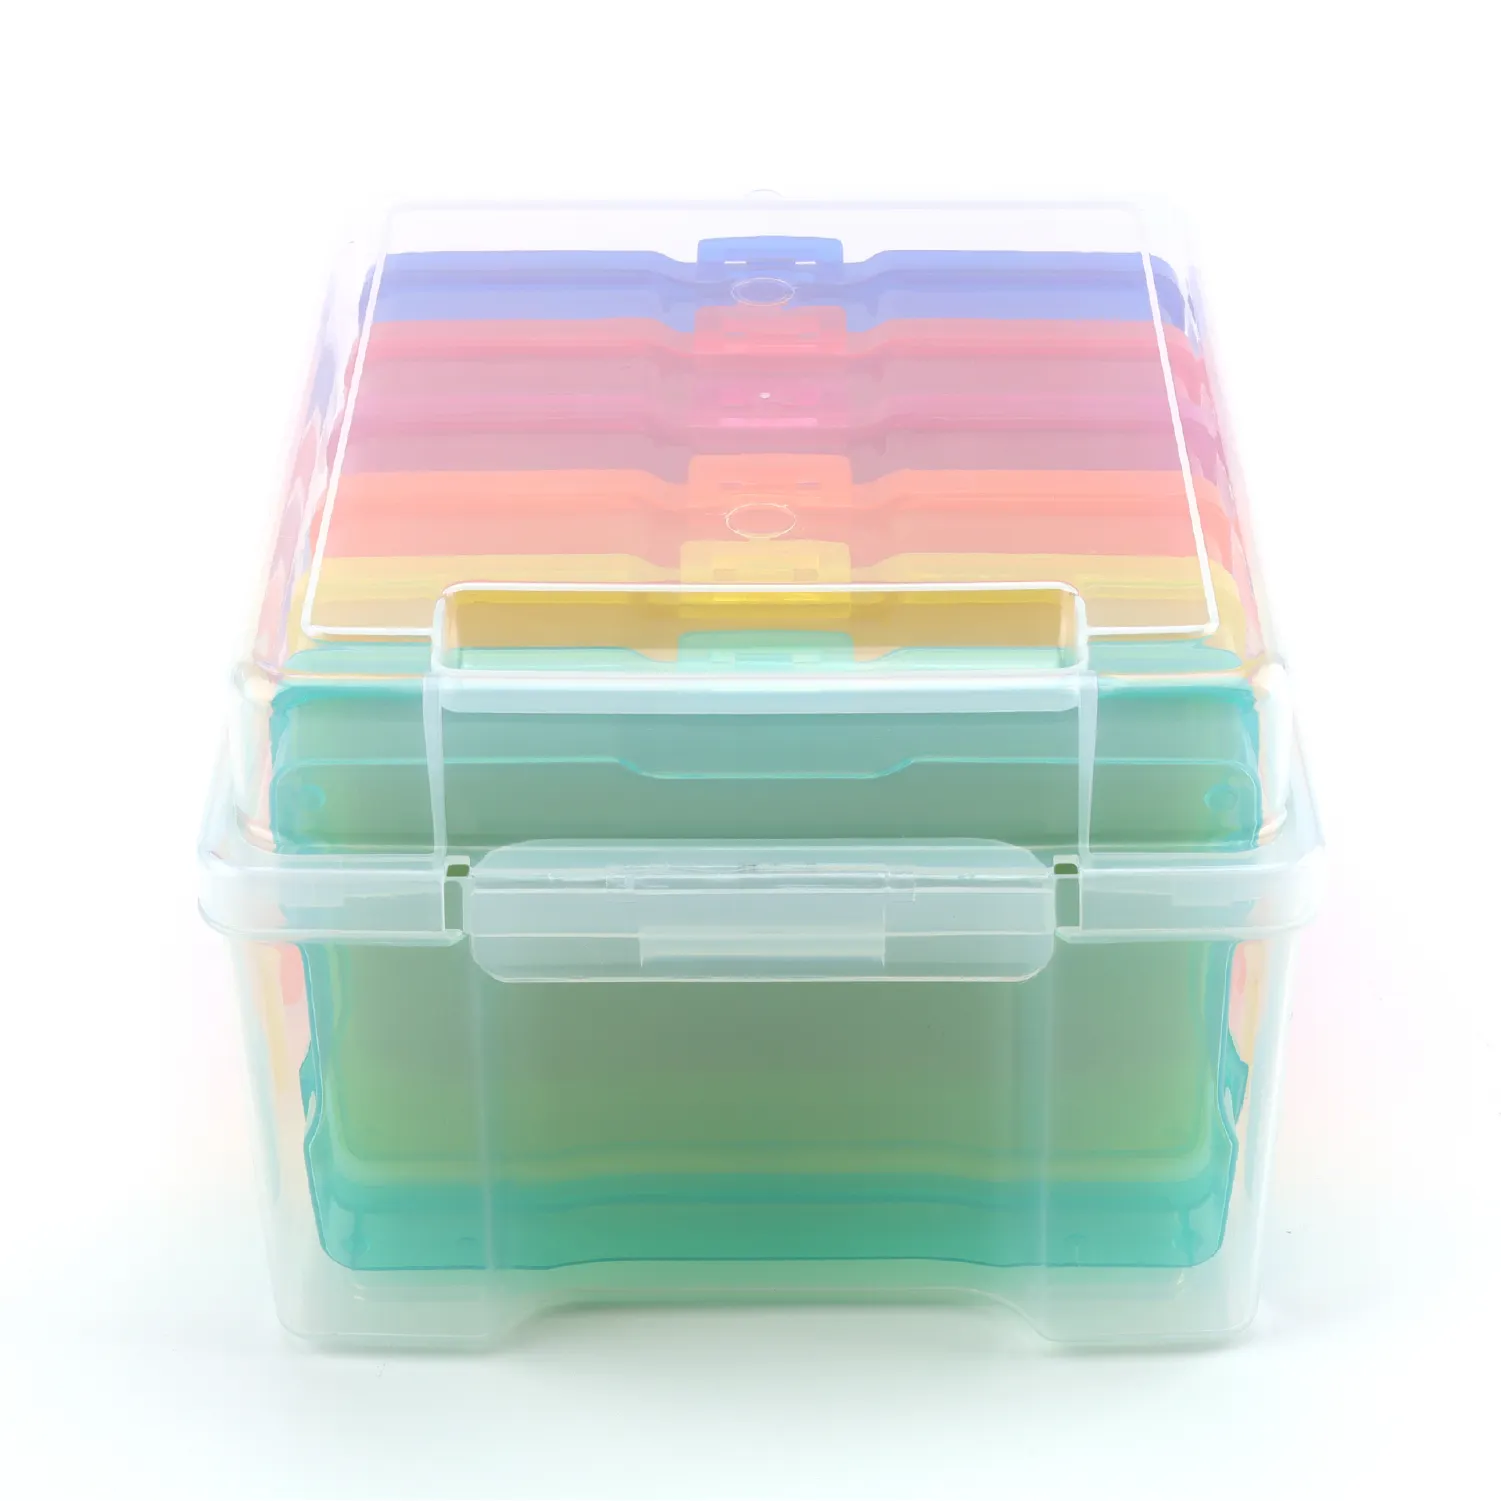 26028C Colorfukl Toy Blocks Organizer case Photo storage box Card organizer with 6 seperate small plastic boxes inside